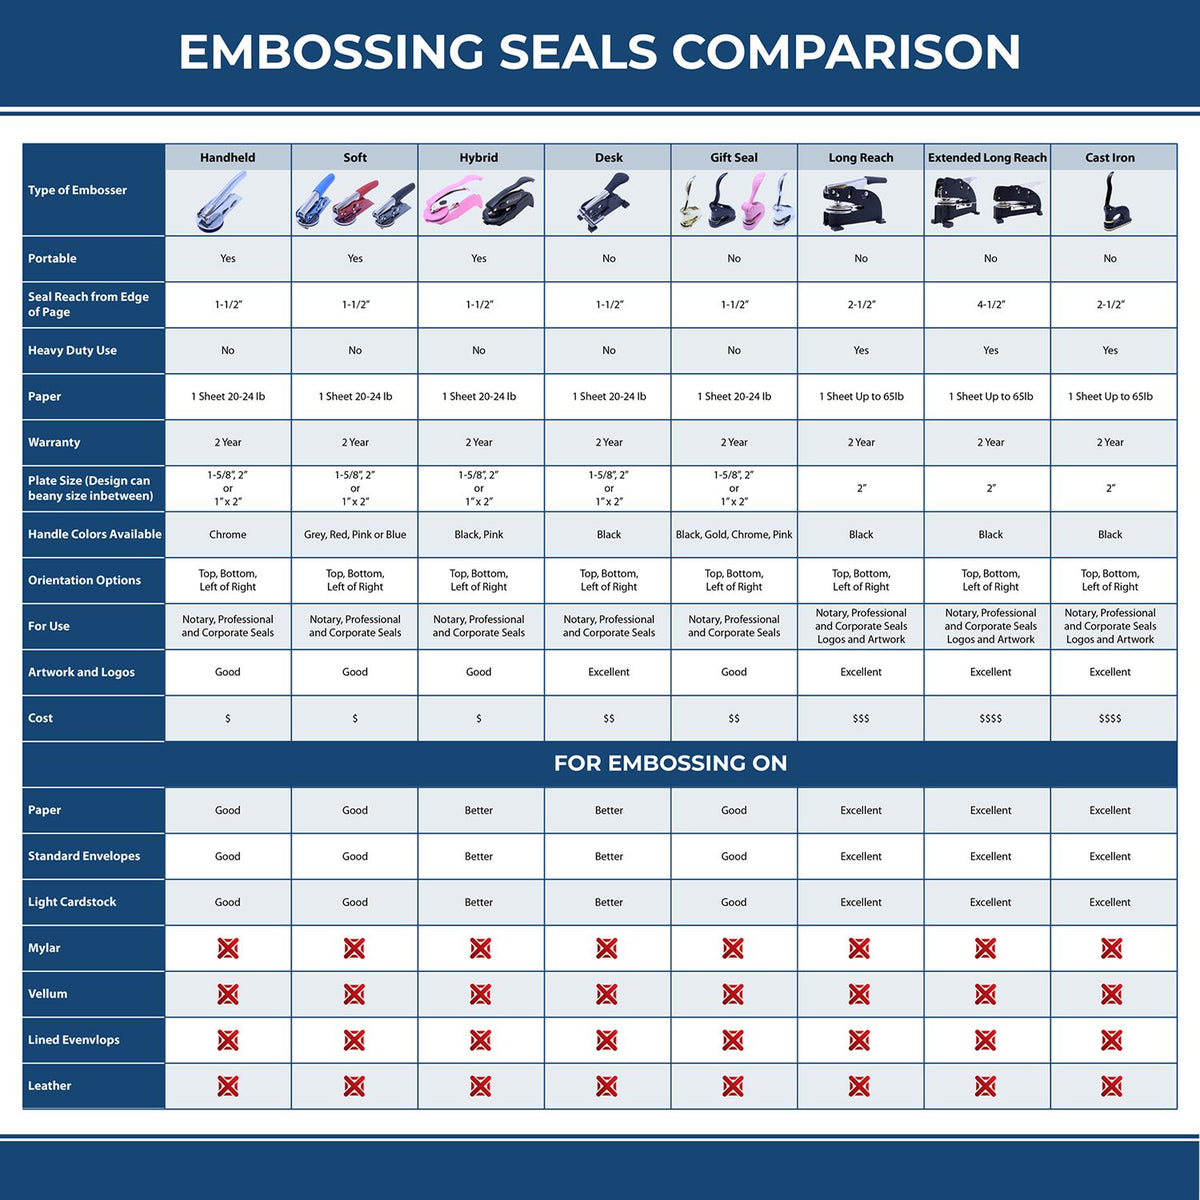 Interior Designer Gold Gift Seal Embosser 3026ID Embossing Seal Comparison